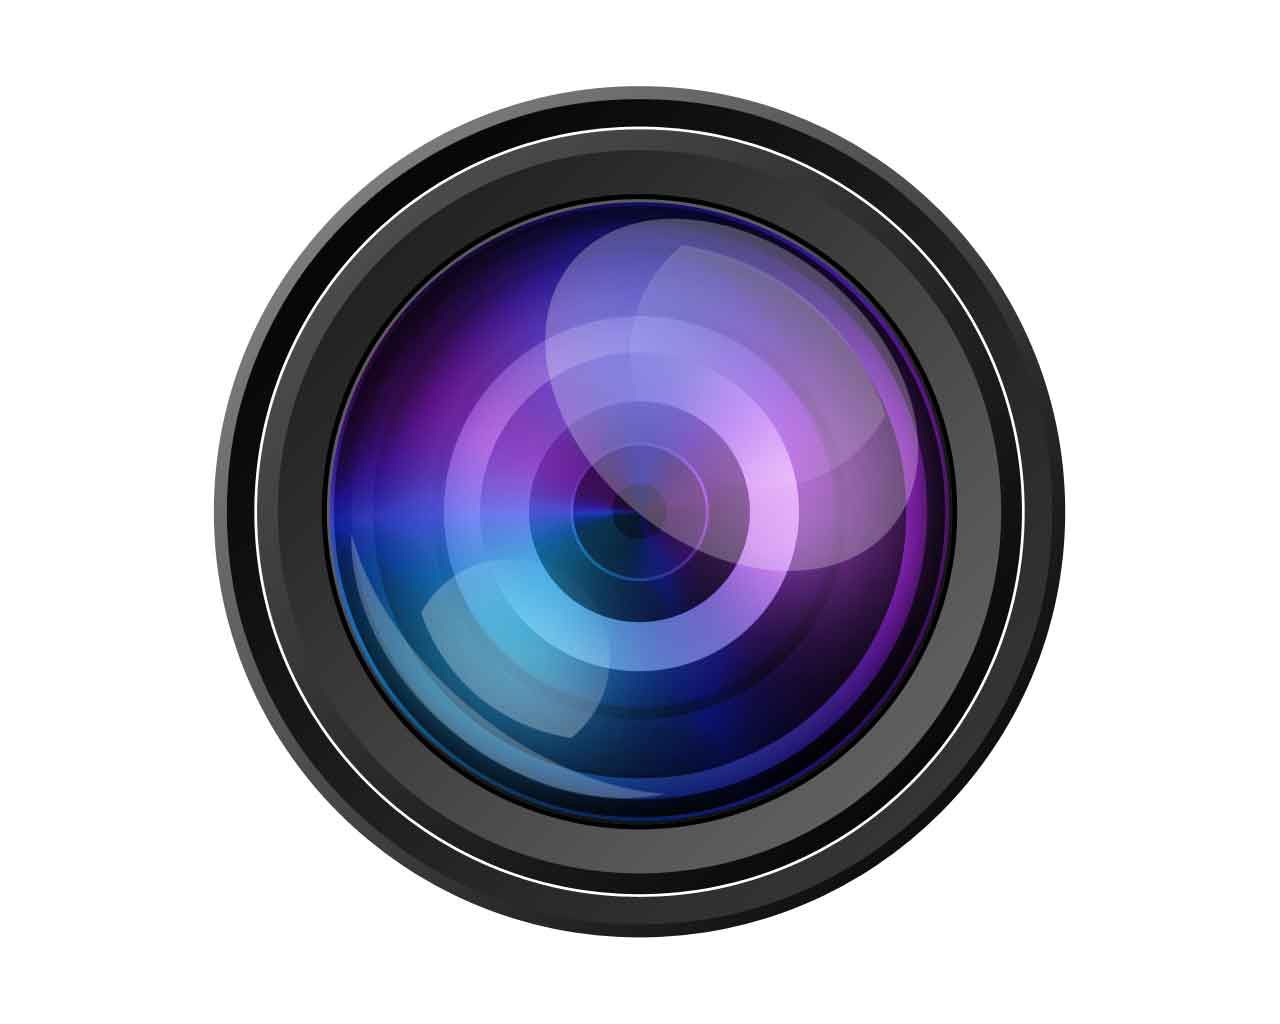 camera lens clipart vector - photo #2